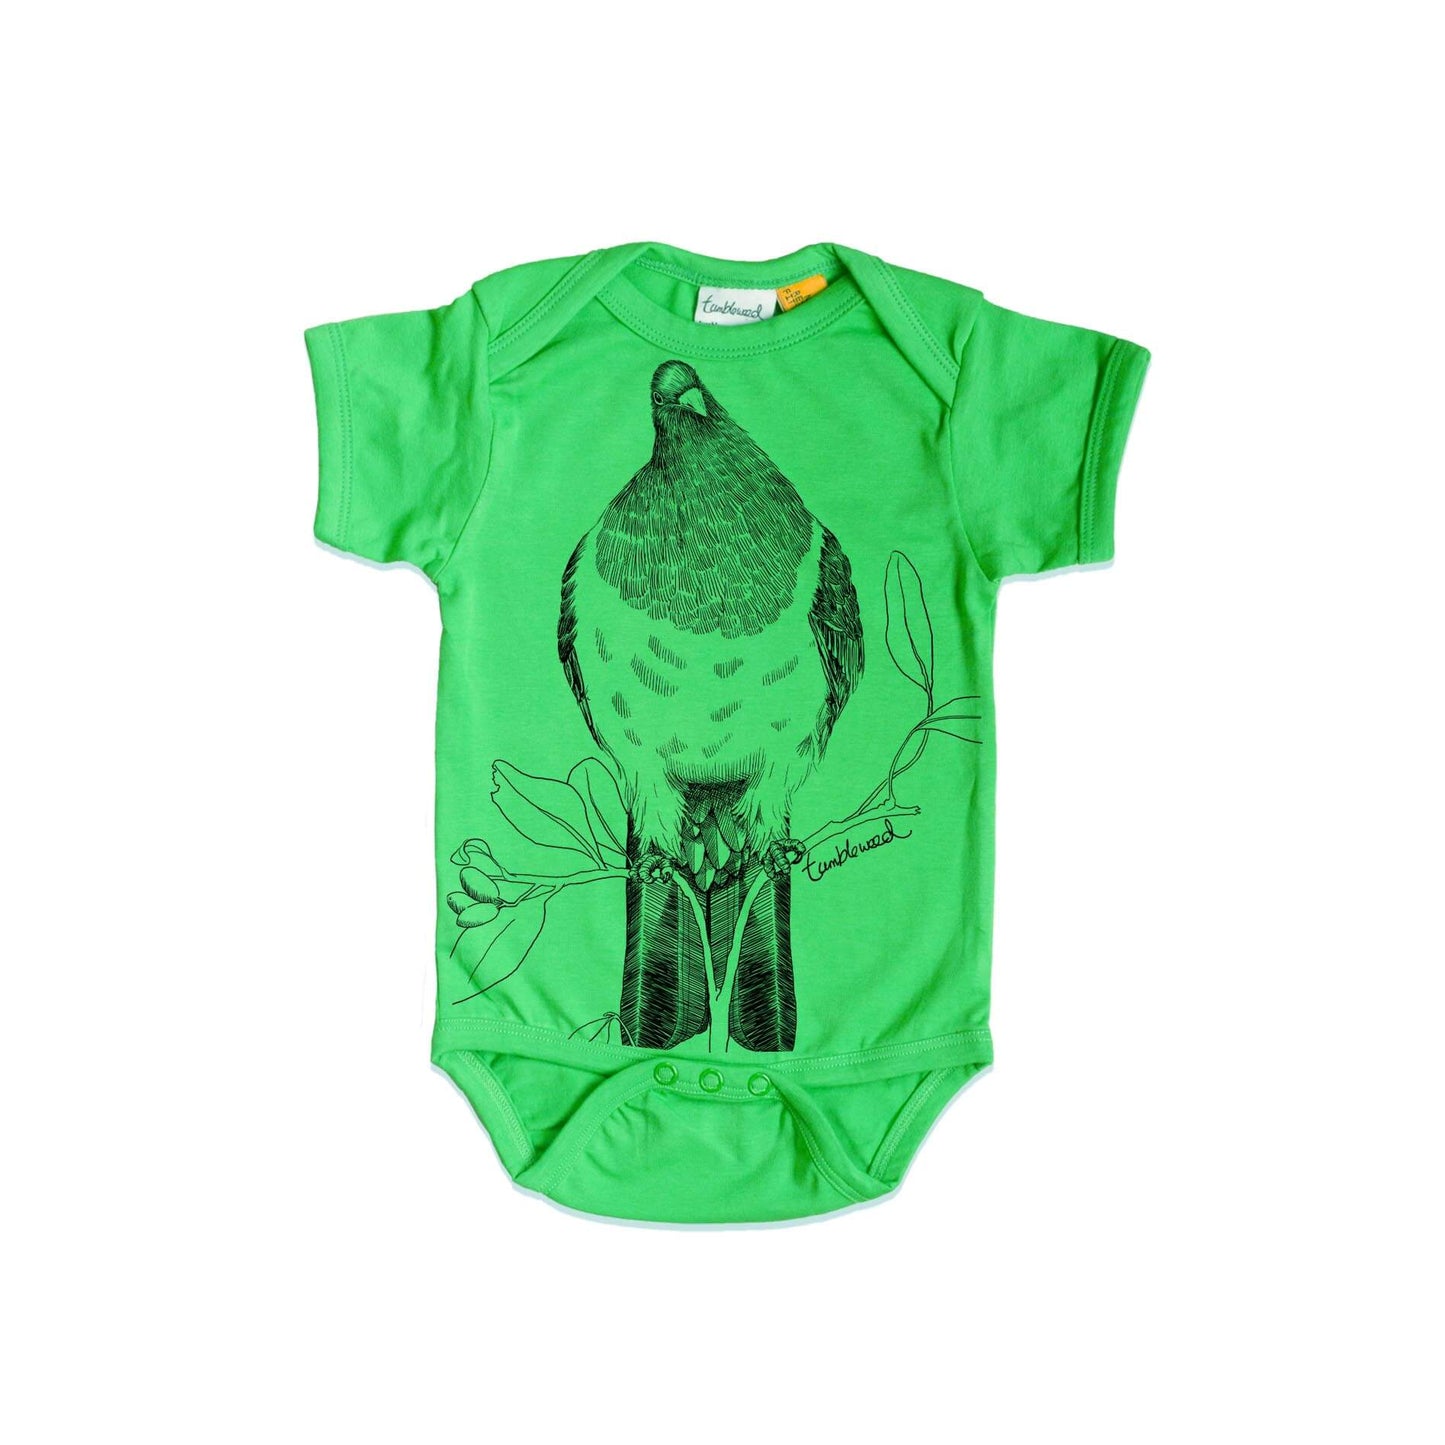 Short sleeved, green, organic cotton, baby onesie featuring a screen printed Kereru design.